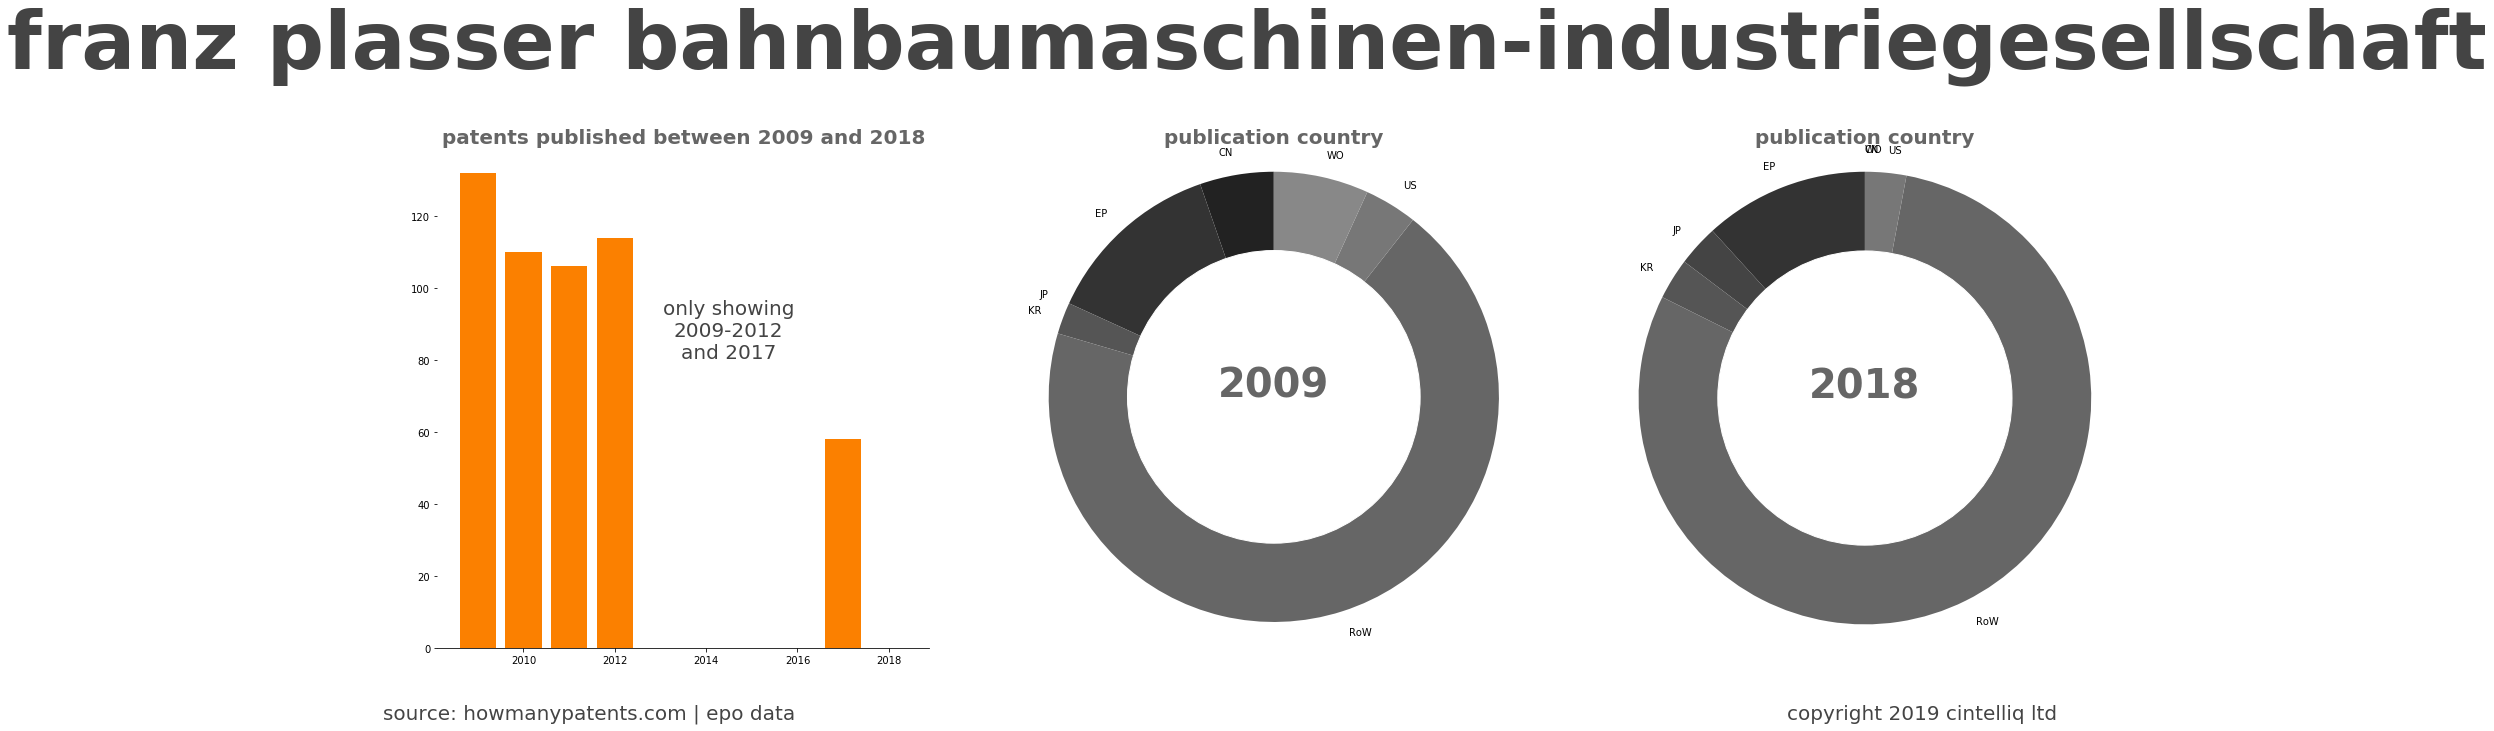 summary of patents for Franz Plasser Bahnbaumaschinen-Industriegesellschaft